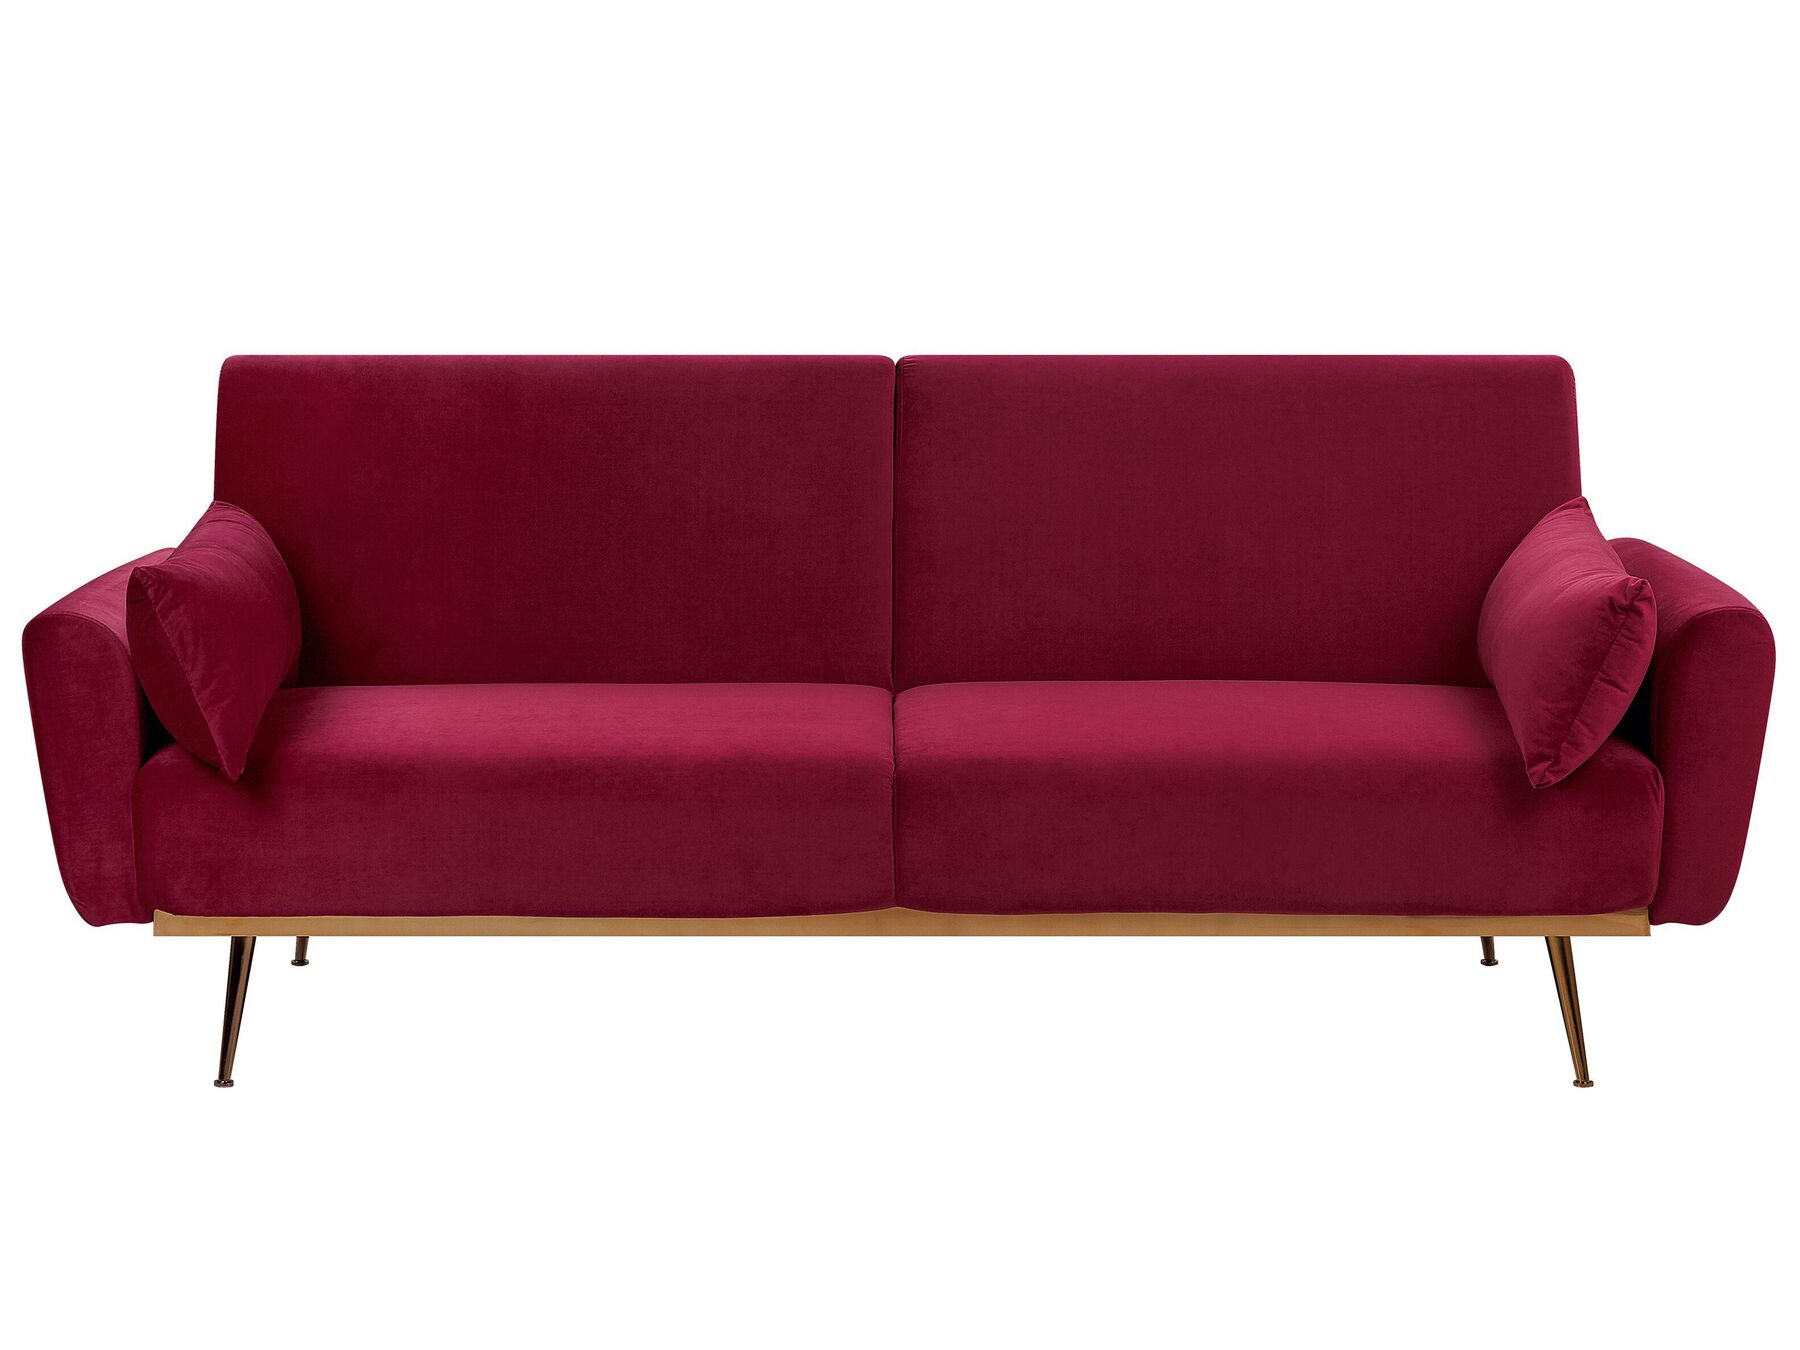 Modern Velvet Sofa Bed Dark Red Metal Legs Convertible Sleeper Eina